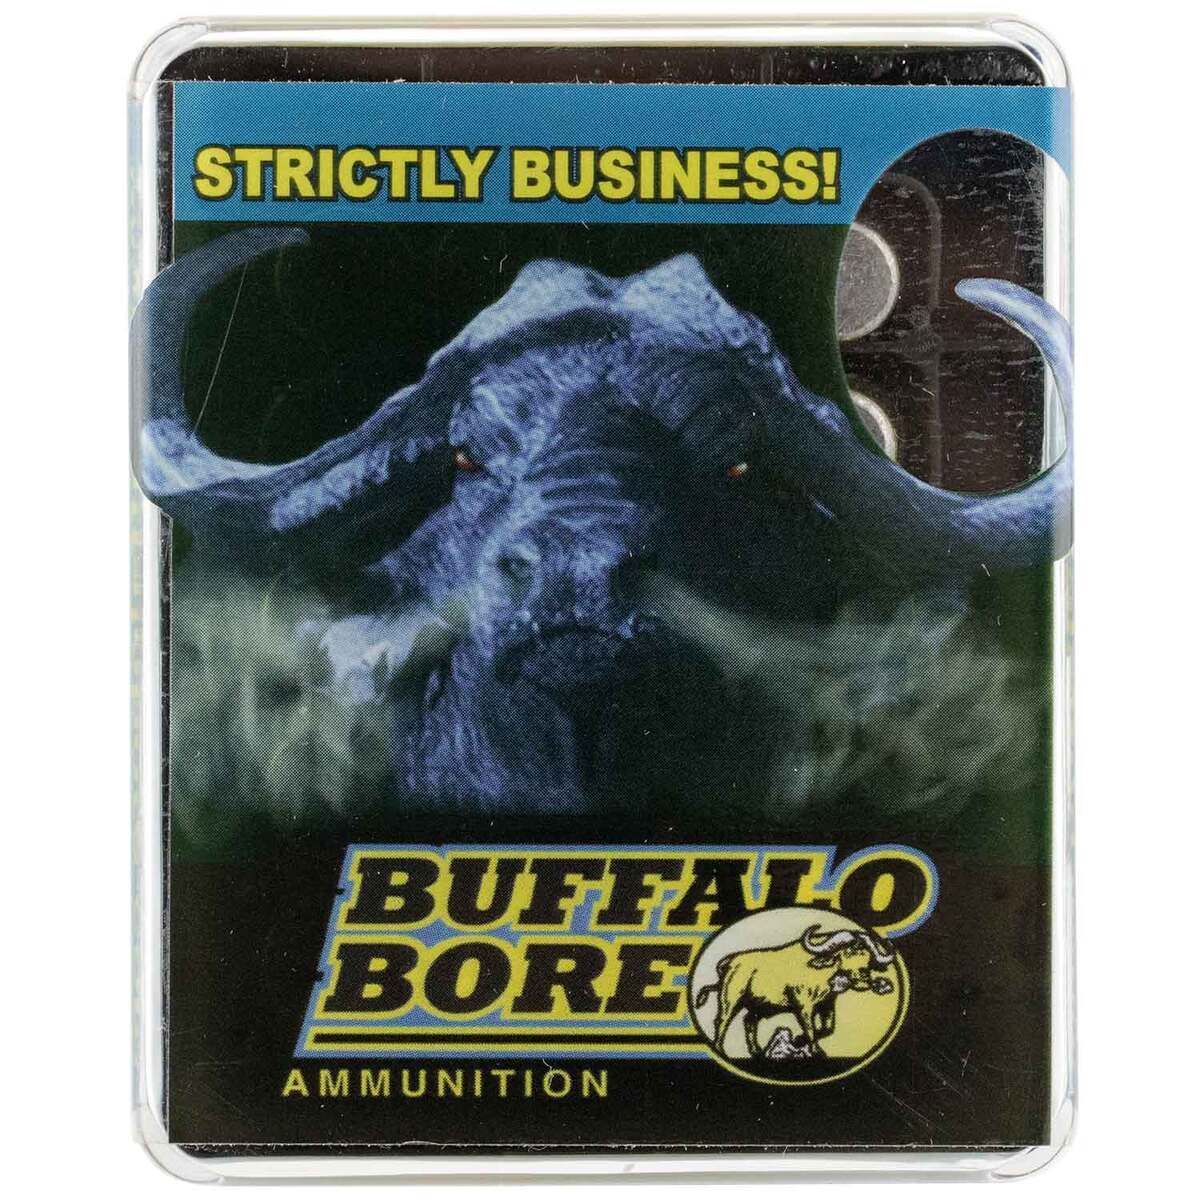 Buffalo Bore Hardcast Ammo: Most Powerful Bullets - Handguns